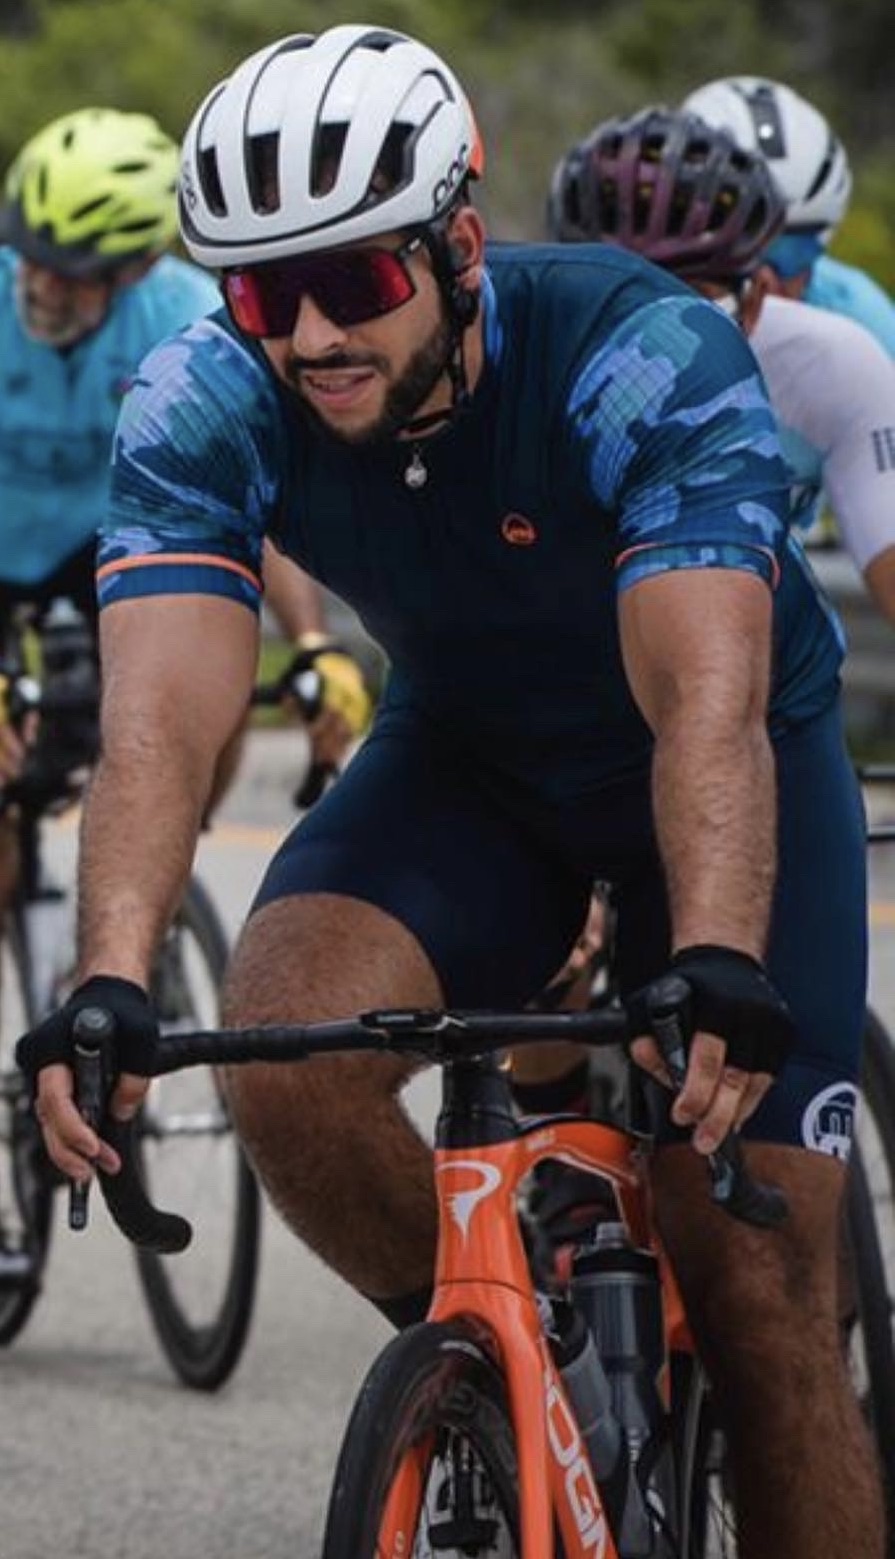 A man riding a bike with a helmet on.